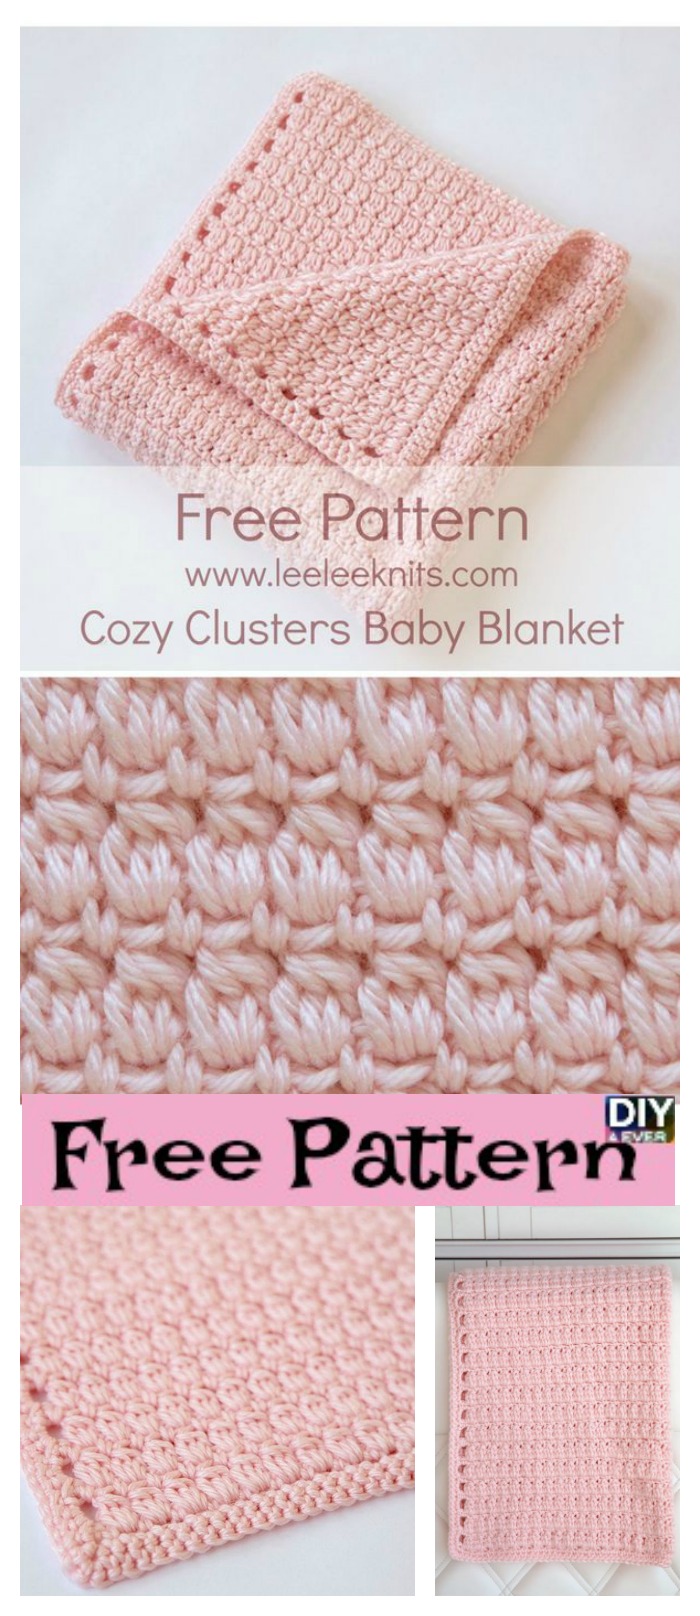 diy4ever-Cozy Clusters Crochet Baby Blanket - Free Pattern